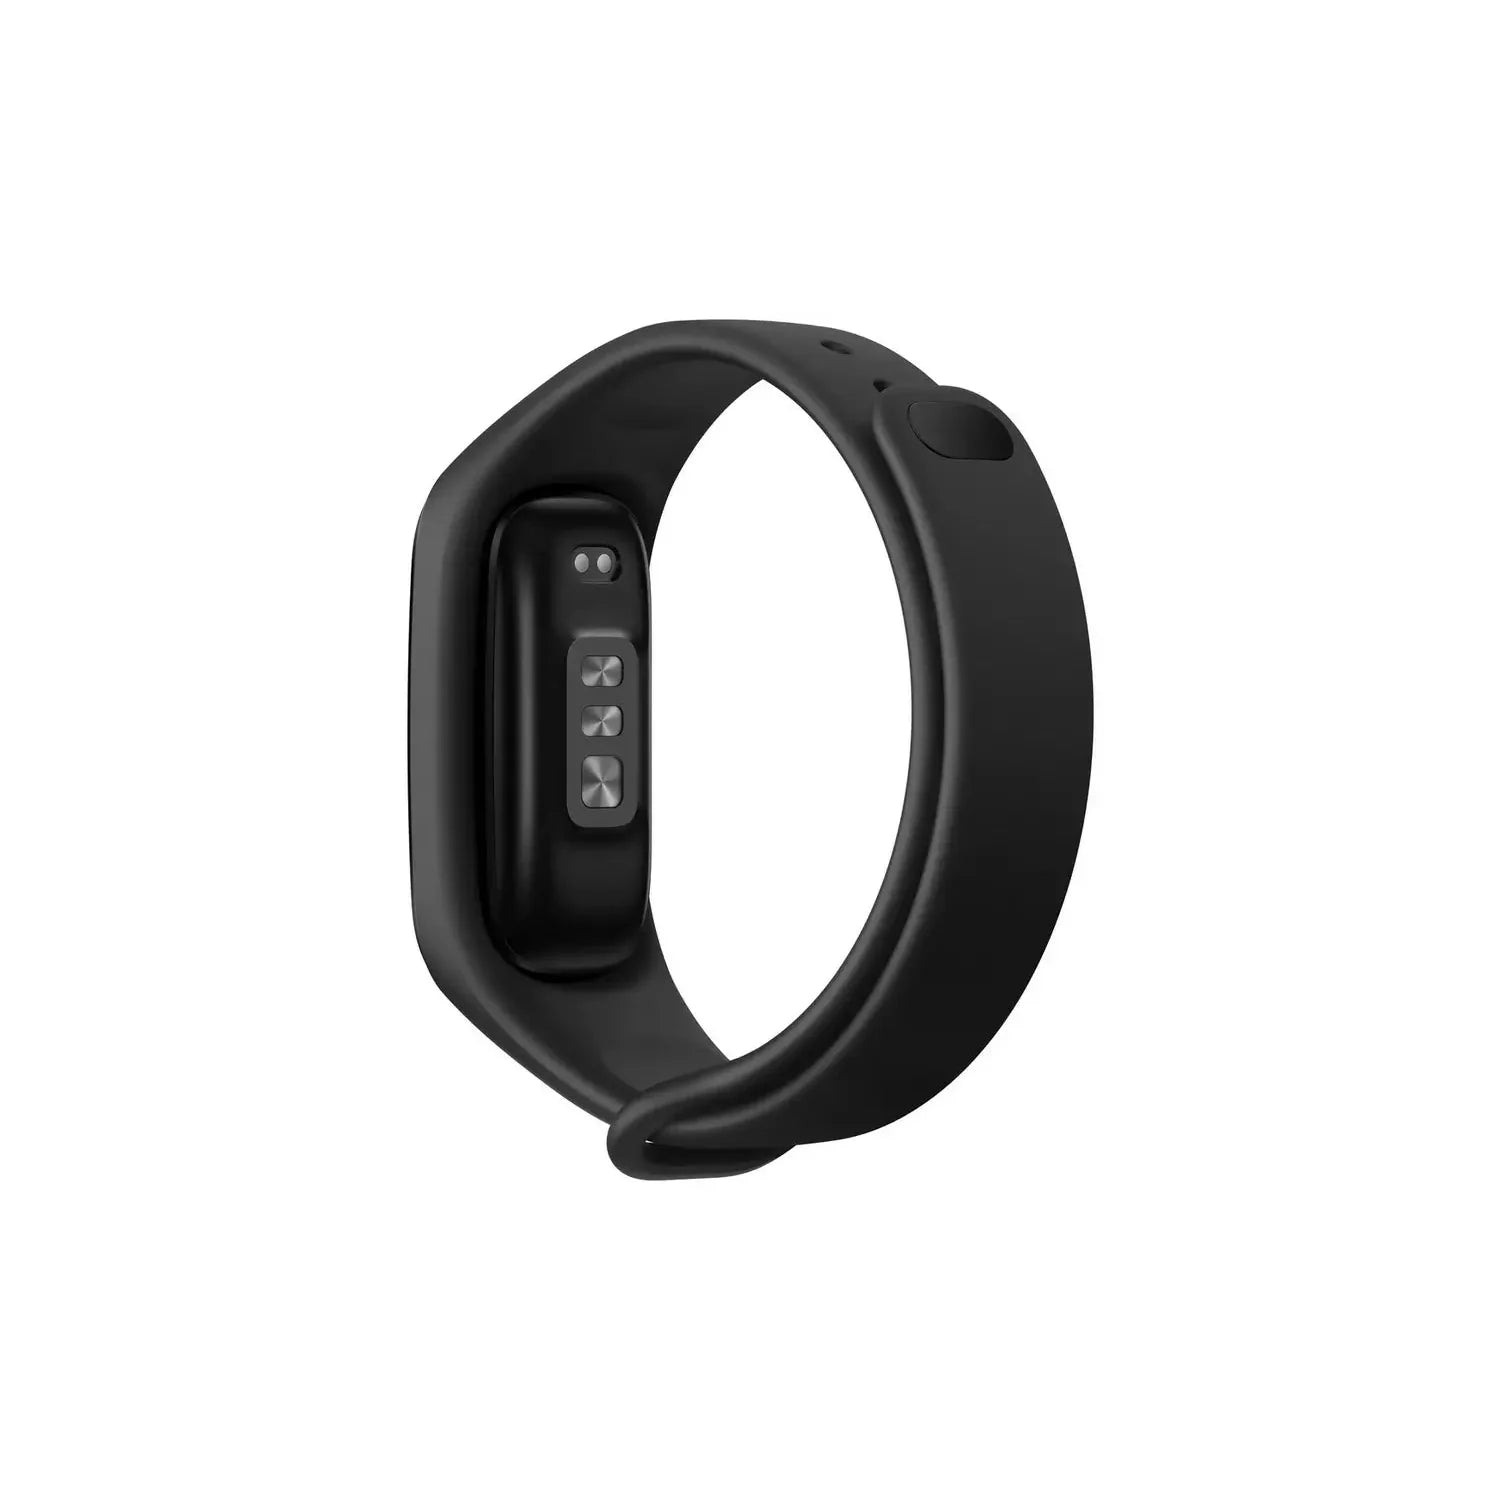 Oppo Band Smart Watch - Black - Refurbished Pristine